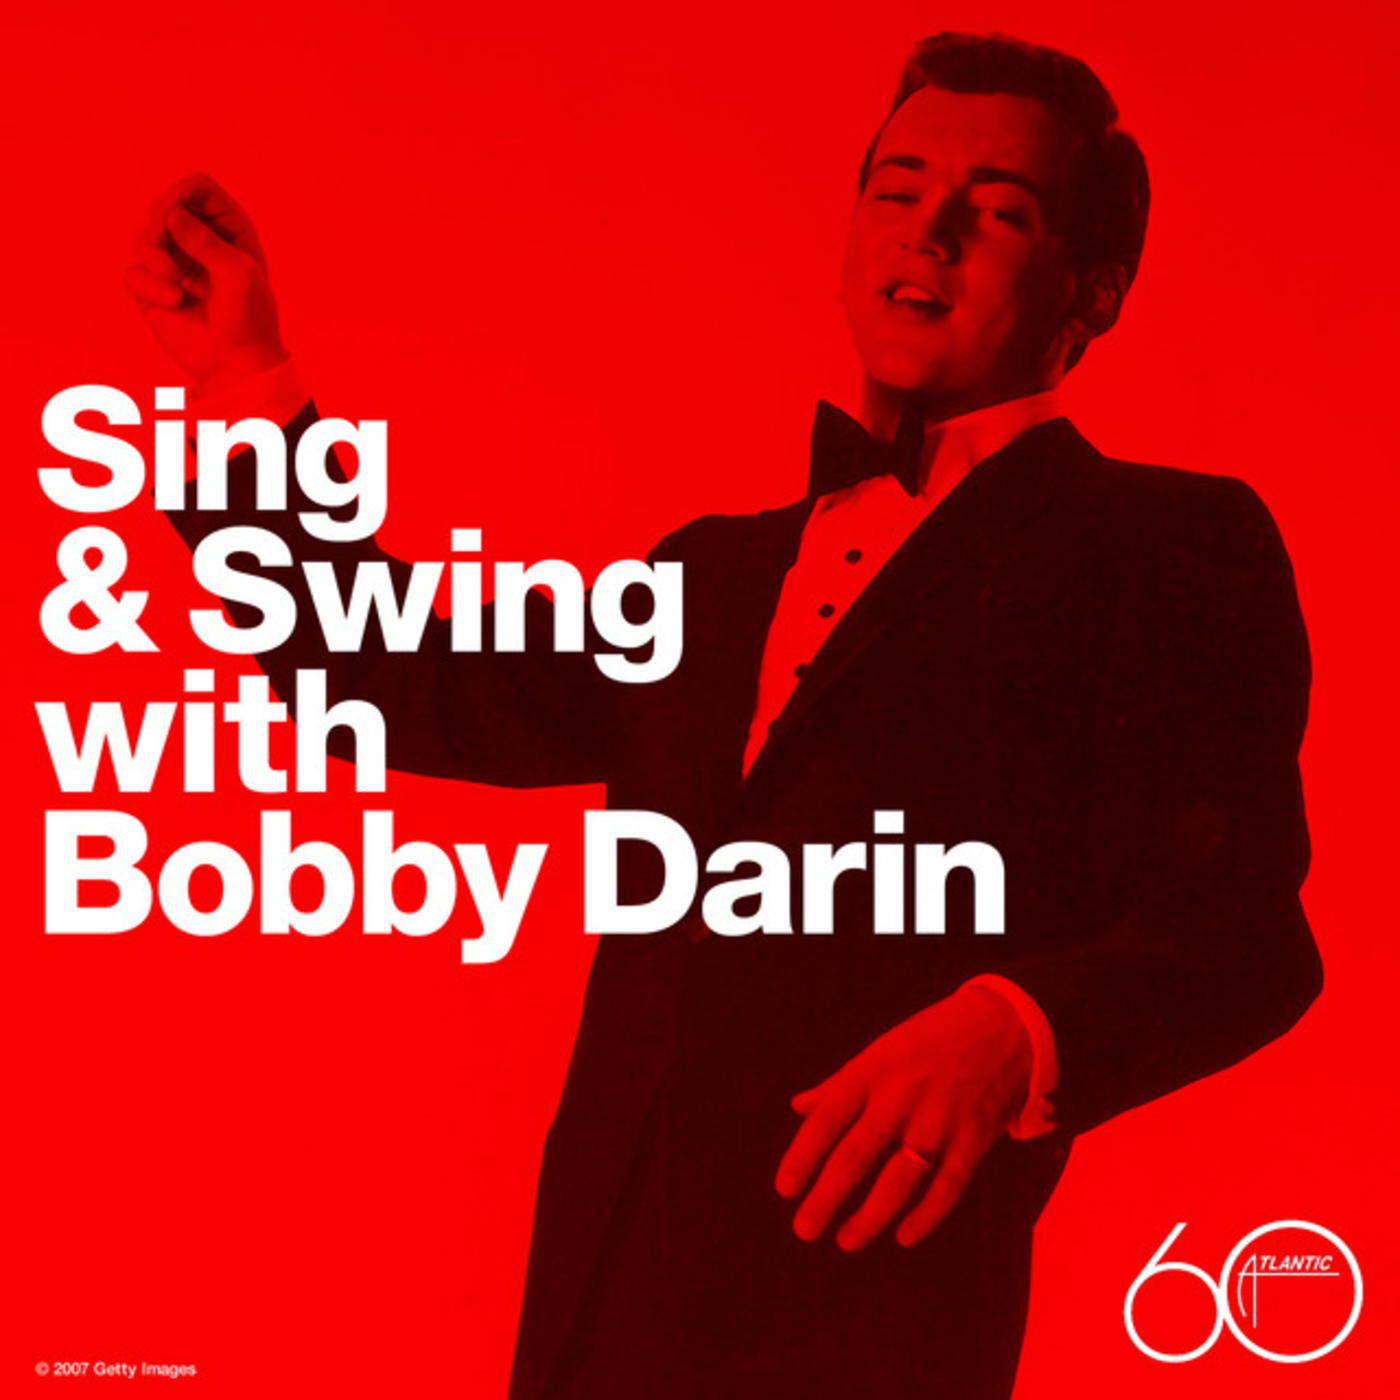 Sing & Swing With Bobby Darin